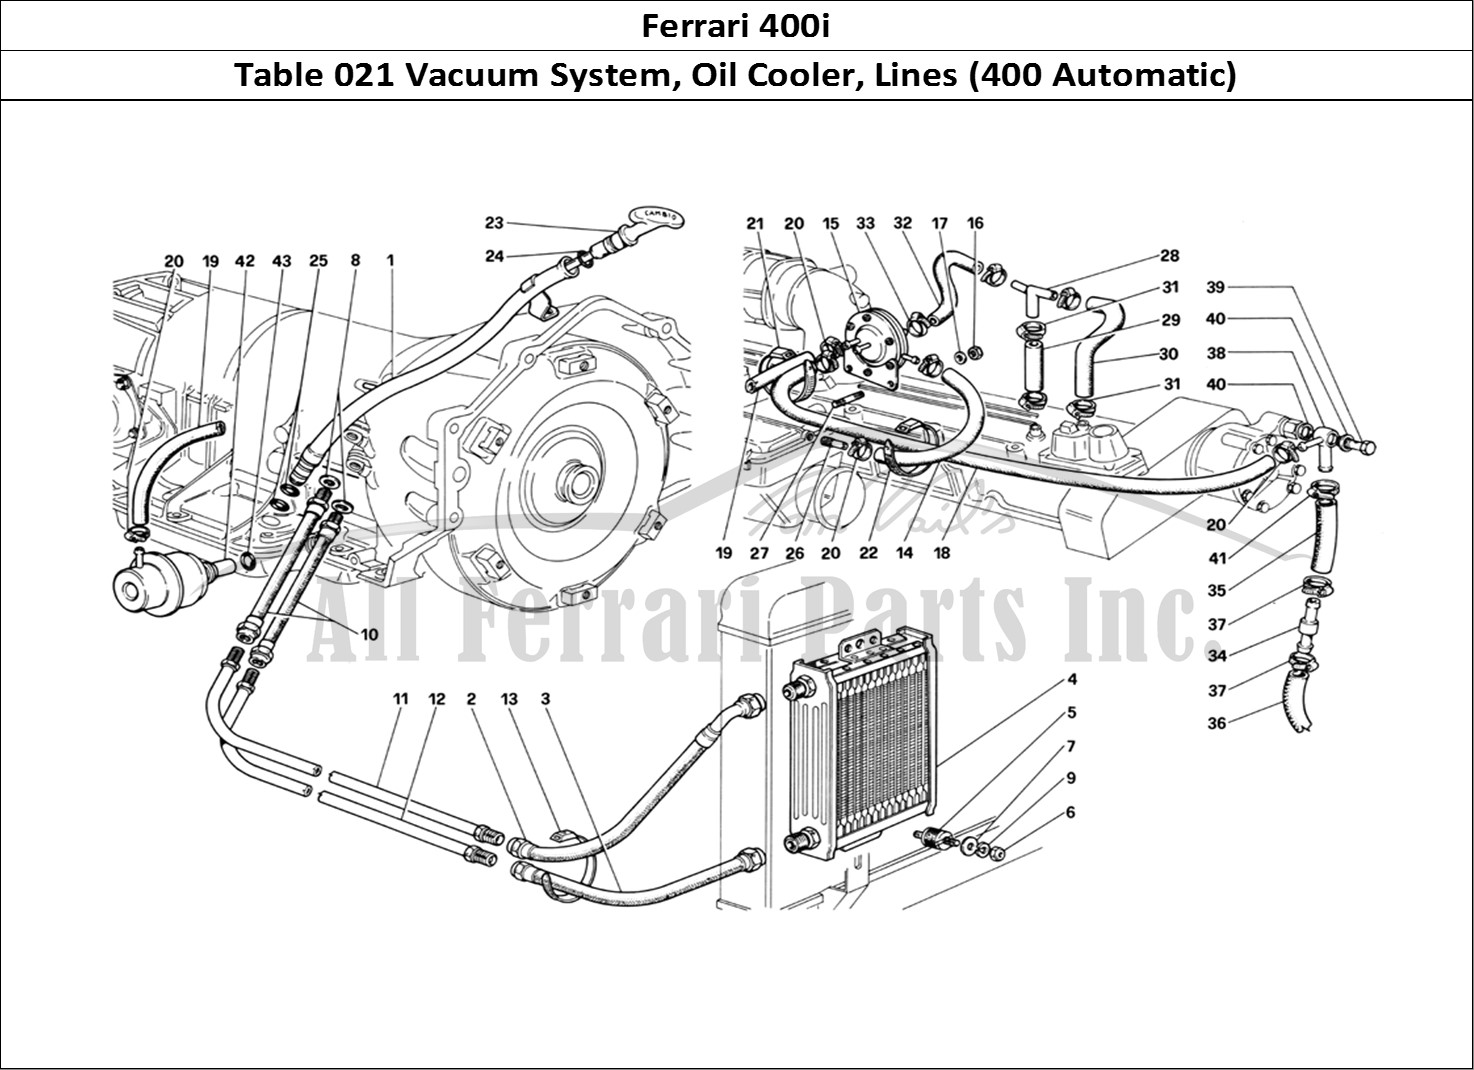 Ferrari Parts Ferrari 400i (1983 Mechanical) Page 021 Vacuum Amplifying Valve a